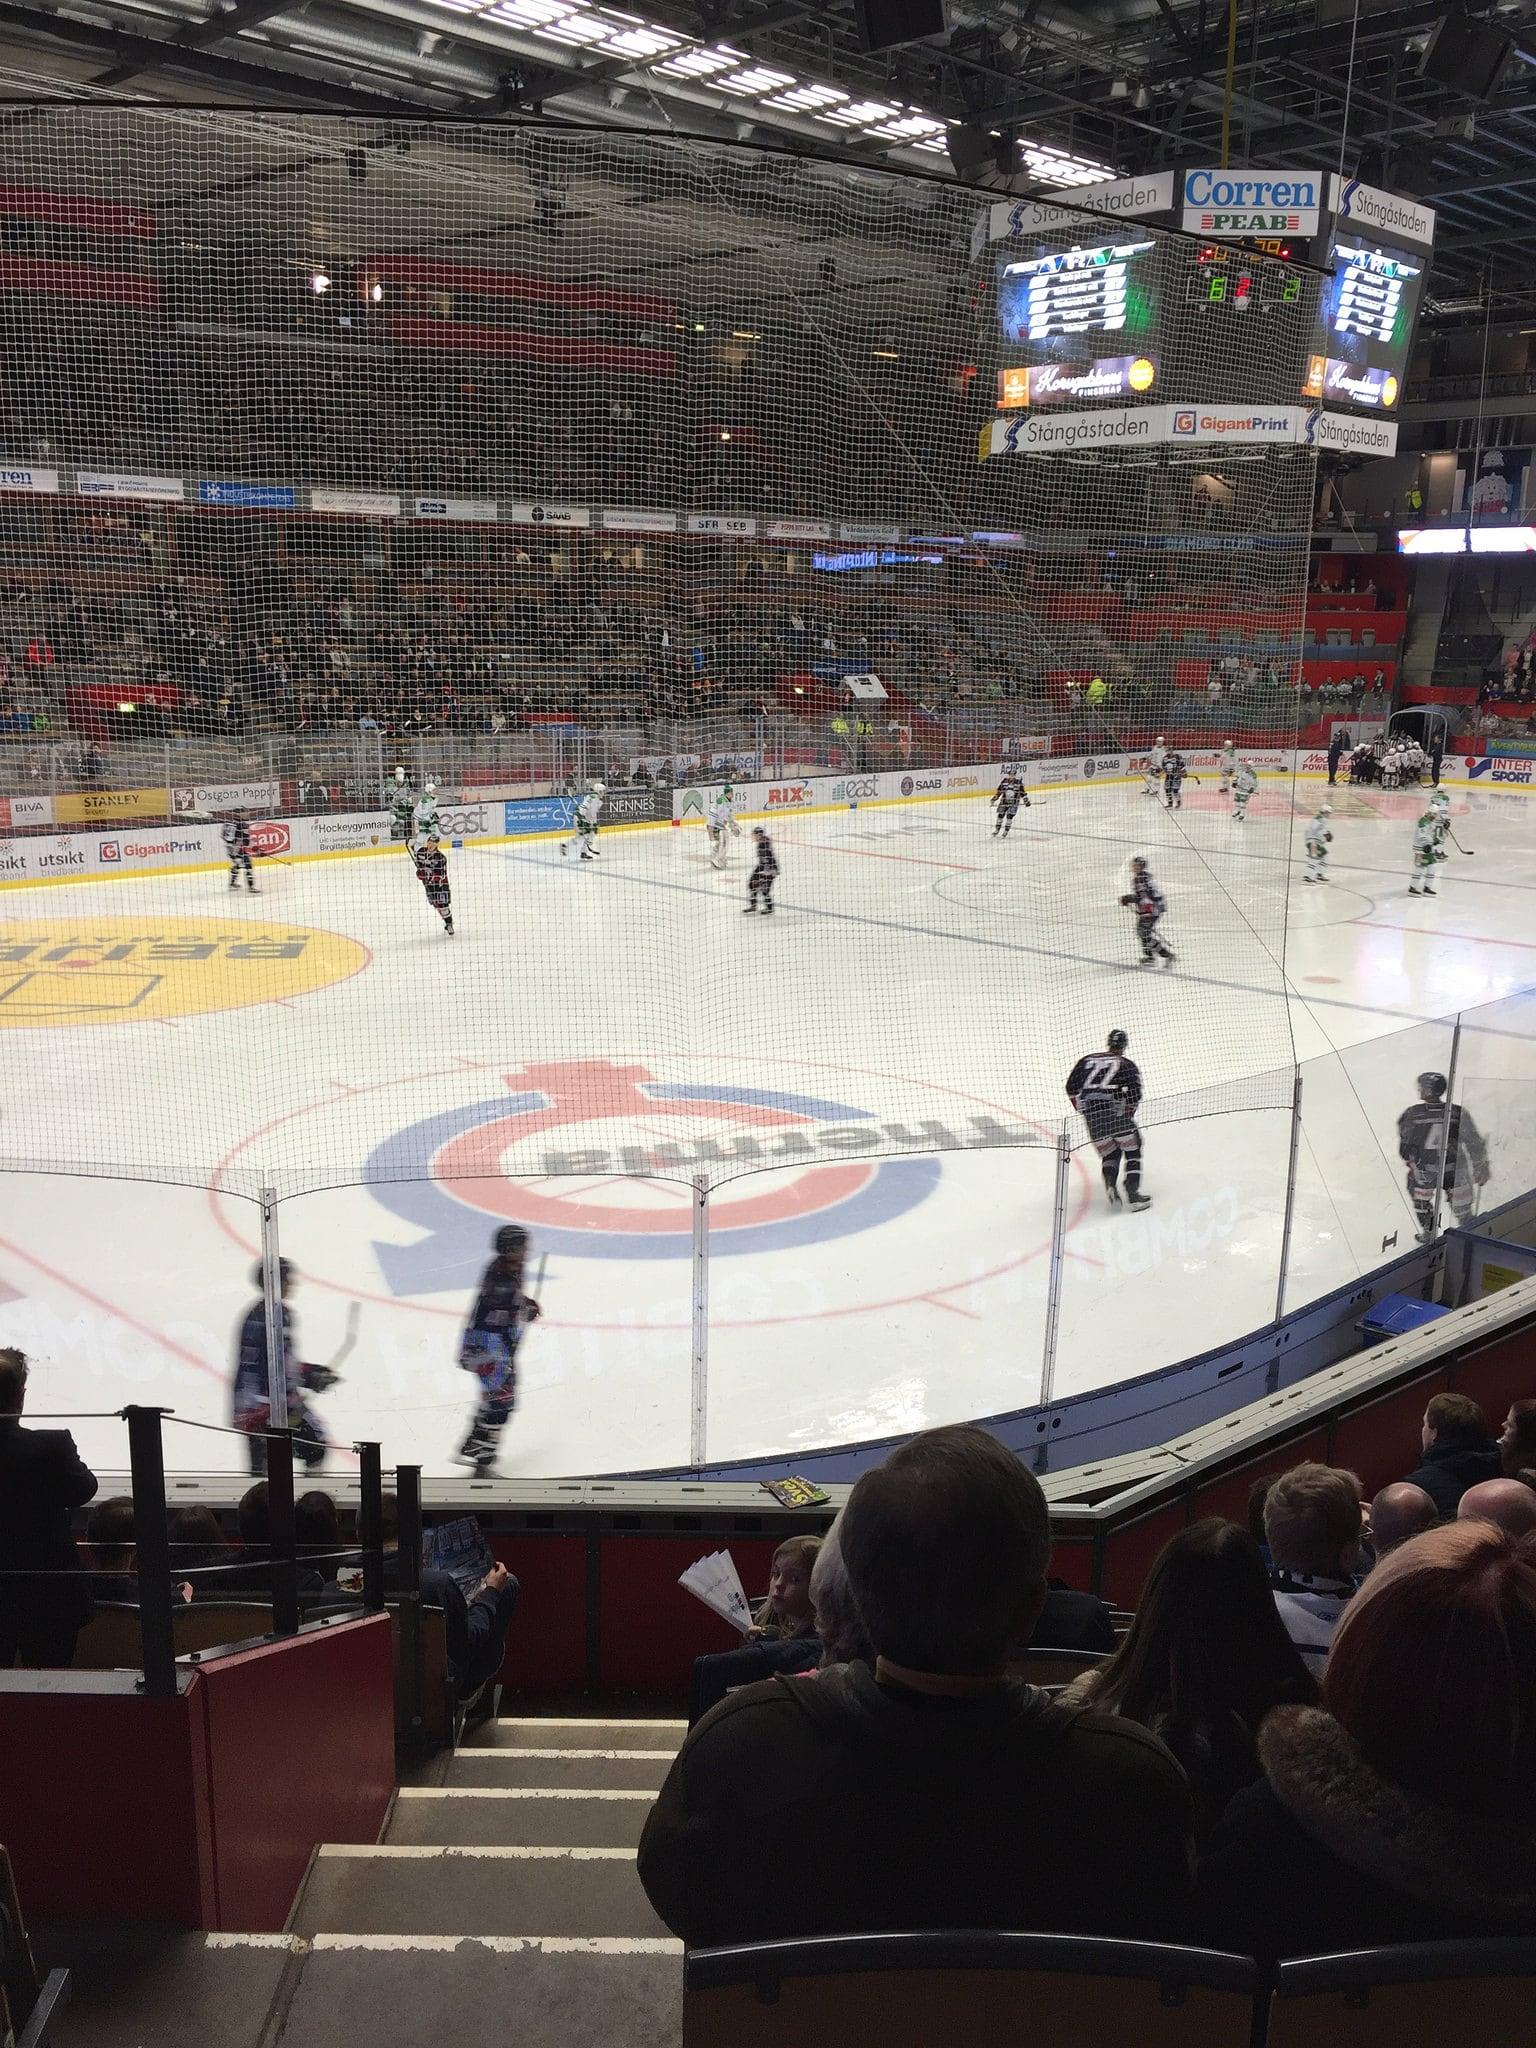 Obrázek Stångebro. hockey sweden linköping iphone östergötland stångebro iphone6 saabarena